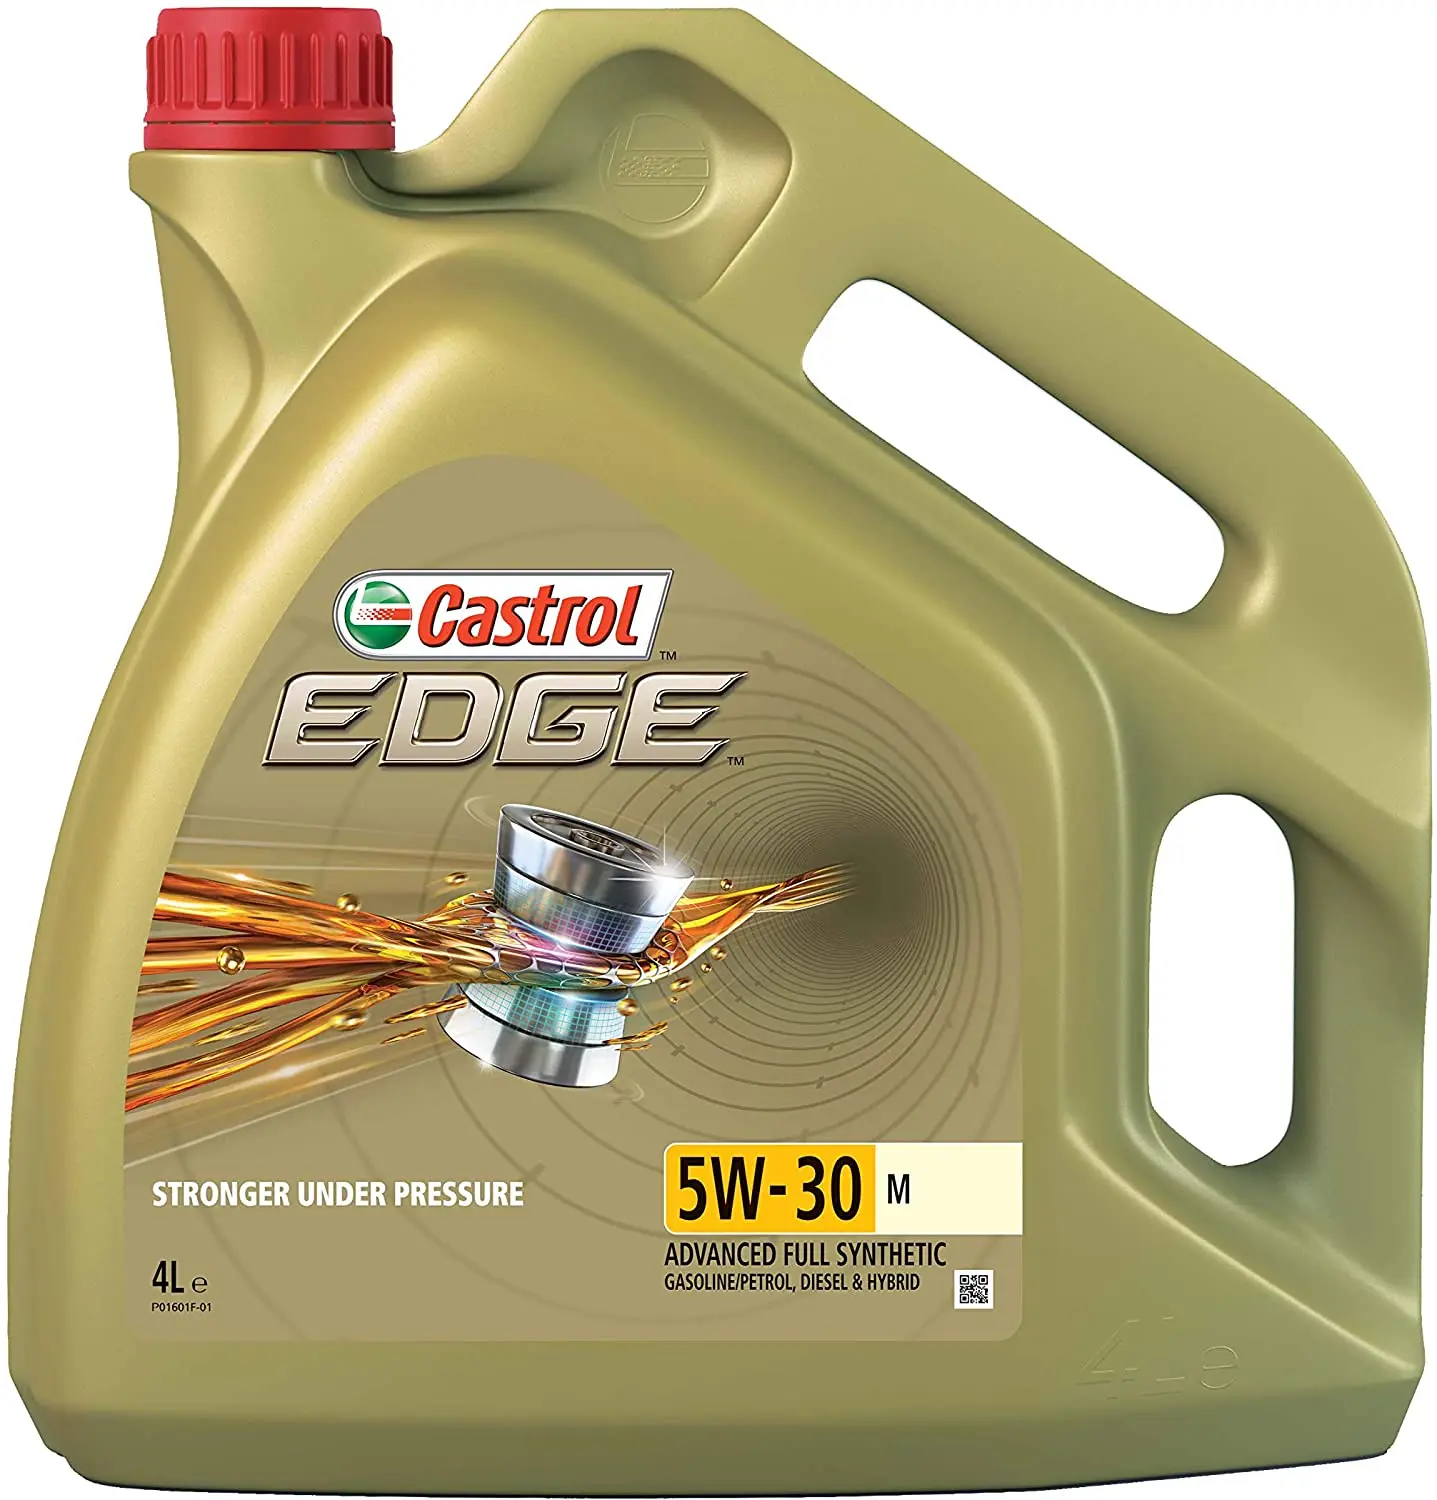 Castrol Edge 5w-30 Ll Engine Oil, Unit Pack Size: Bottle of 500 mL